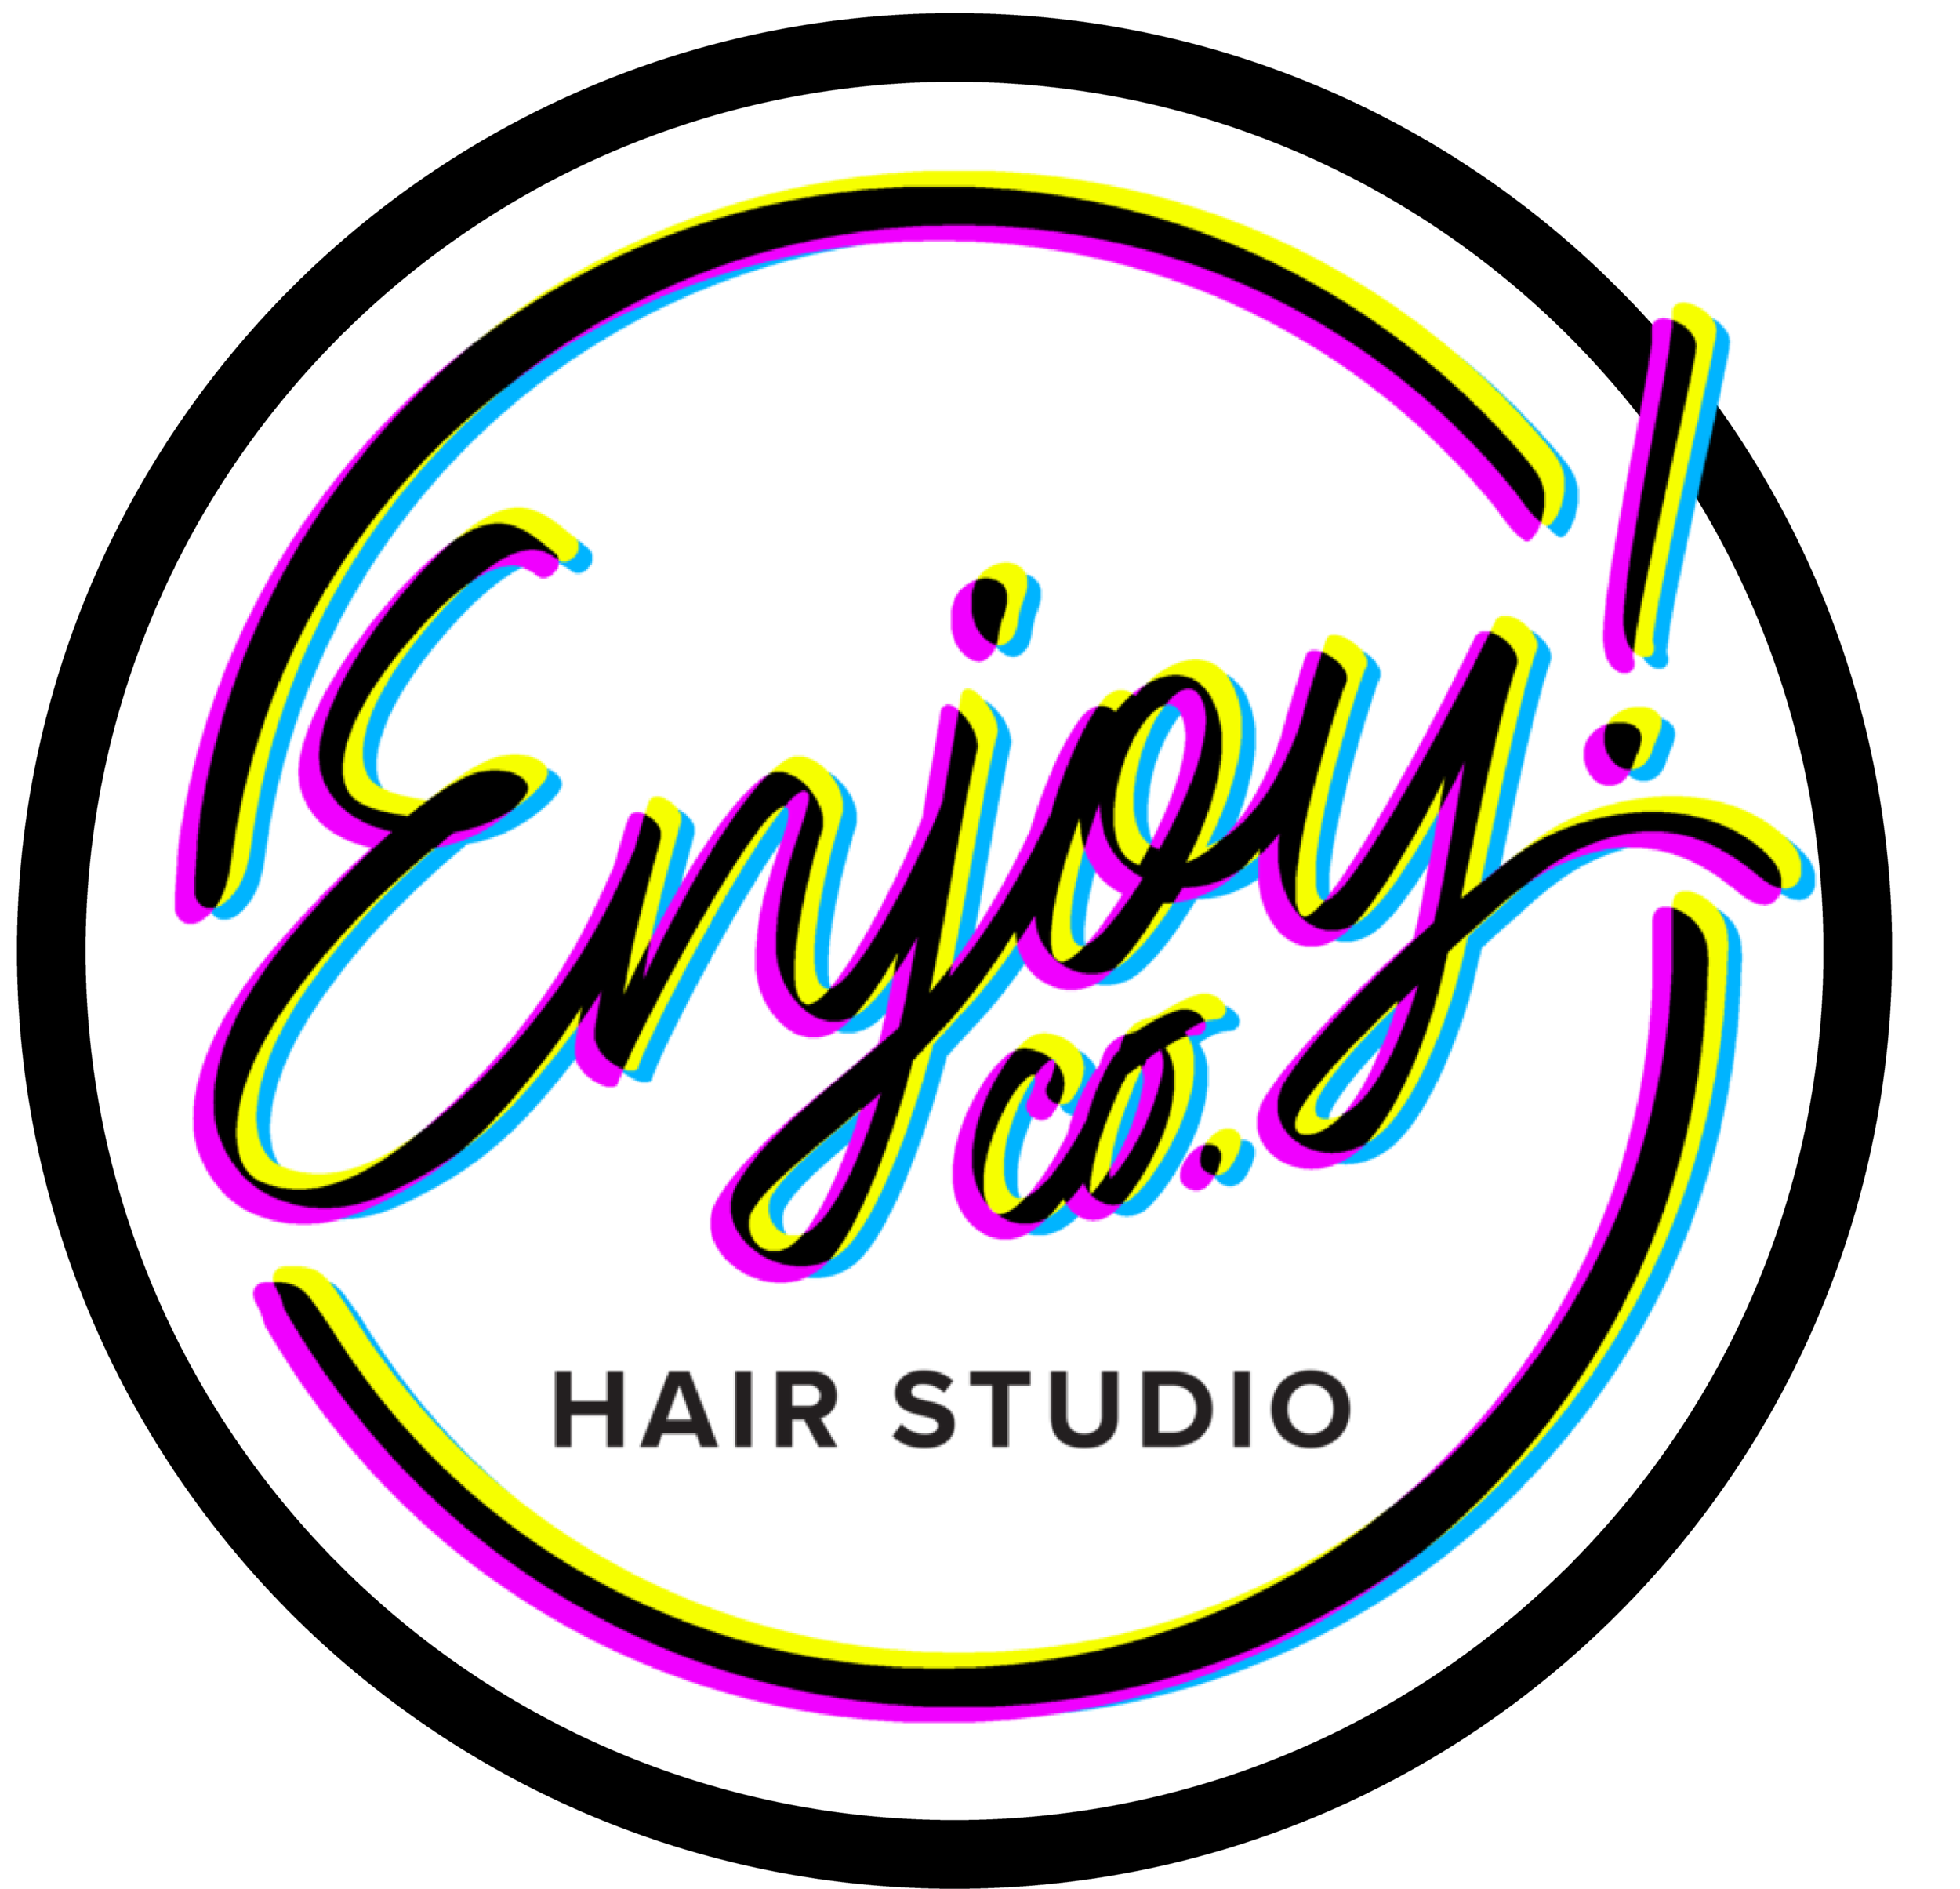 Studio 775 Hair Salon & Barber Shop